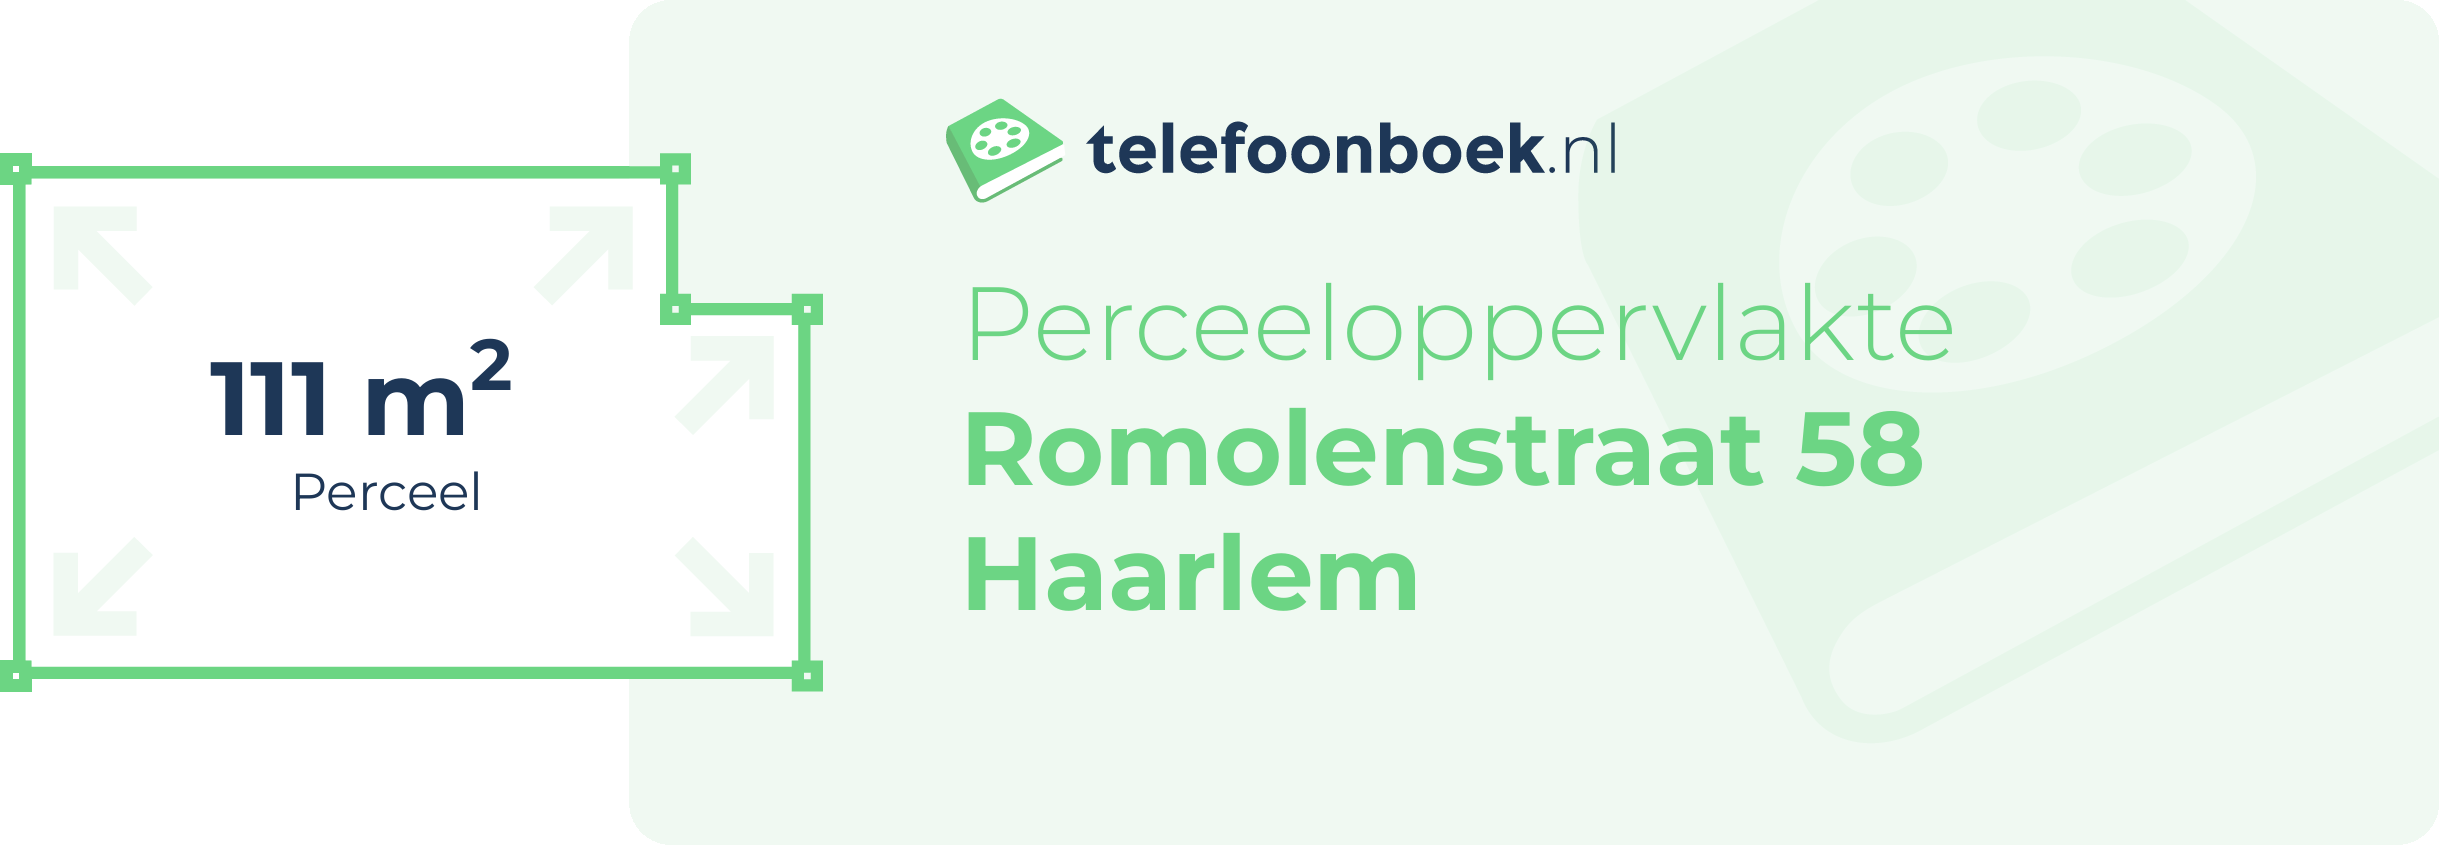 Perceeloppervlakte Romolenstraat 58 Haarlem